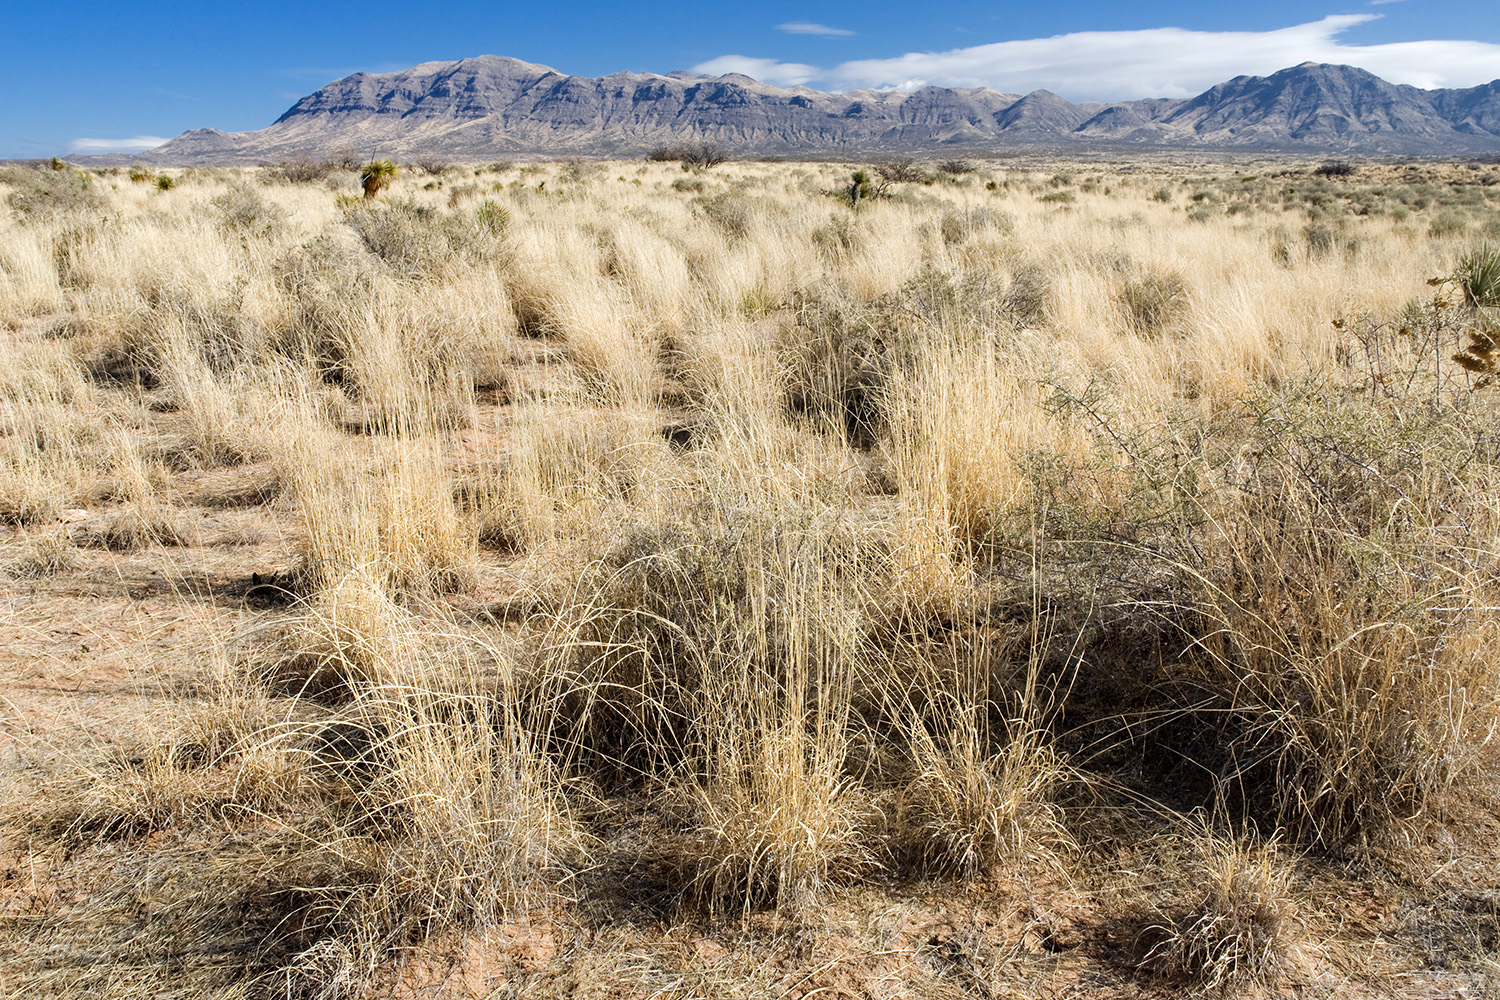 A slightly sparser grassland habitat featuring sand dropseed